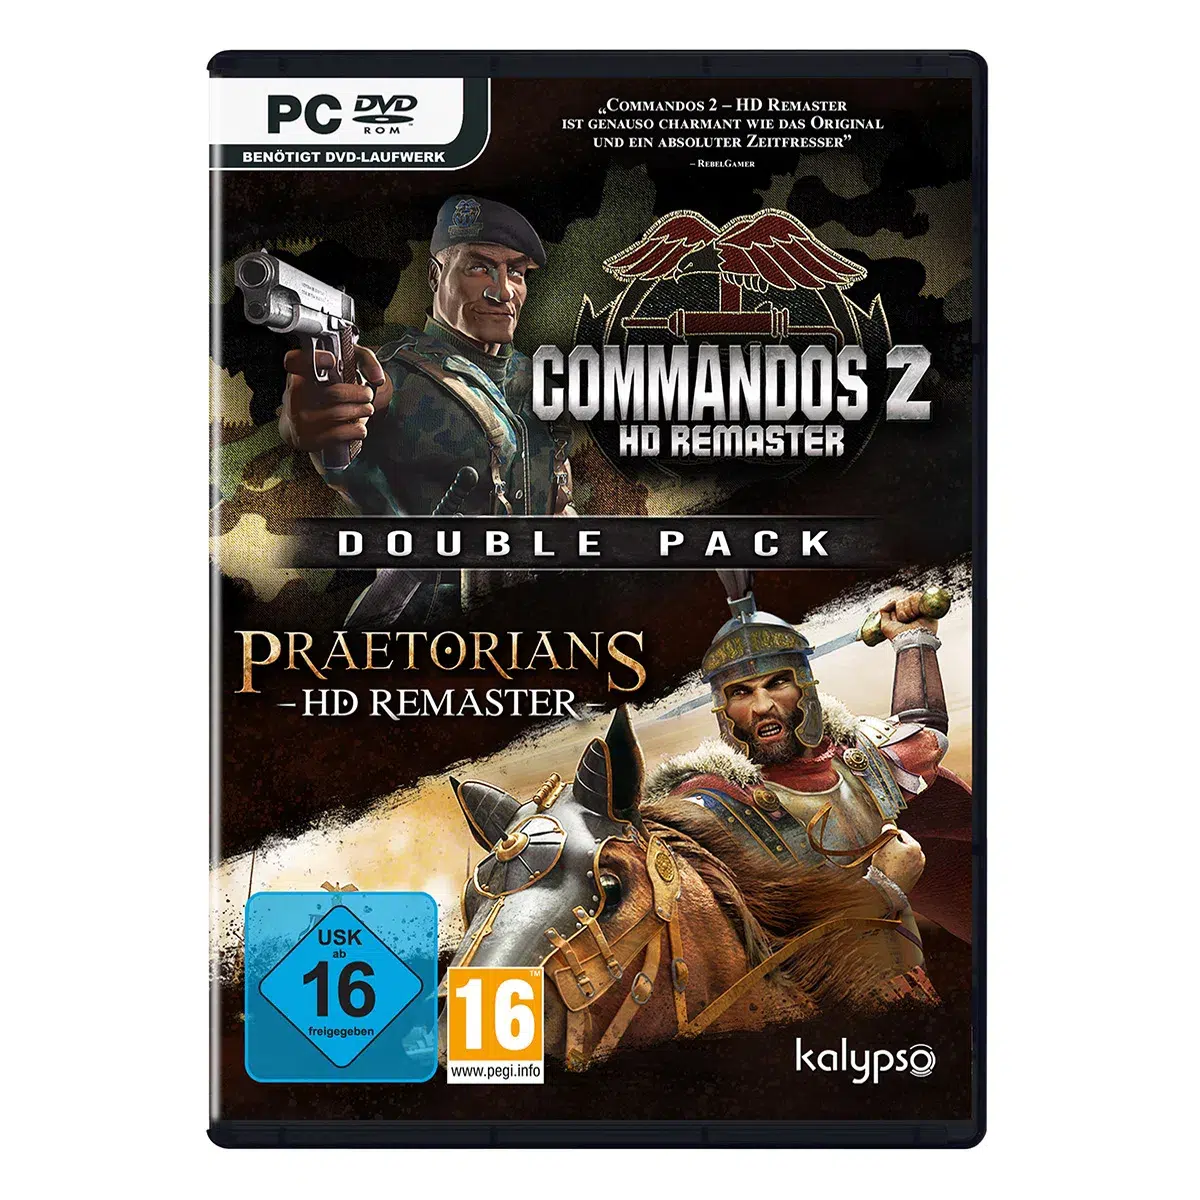 Commandos 2 & Praetorians: HD Remaster Double Pack (PC)